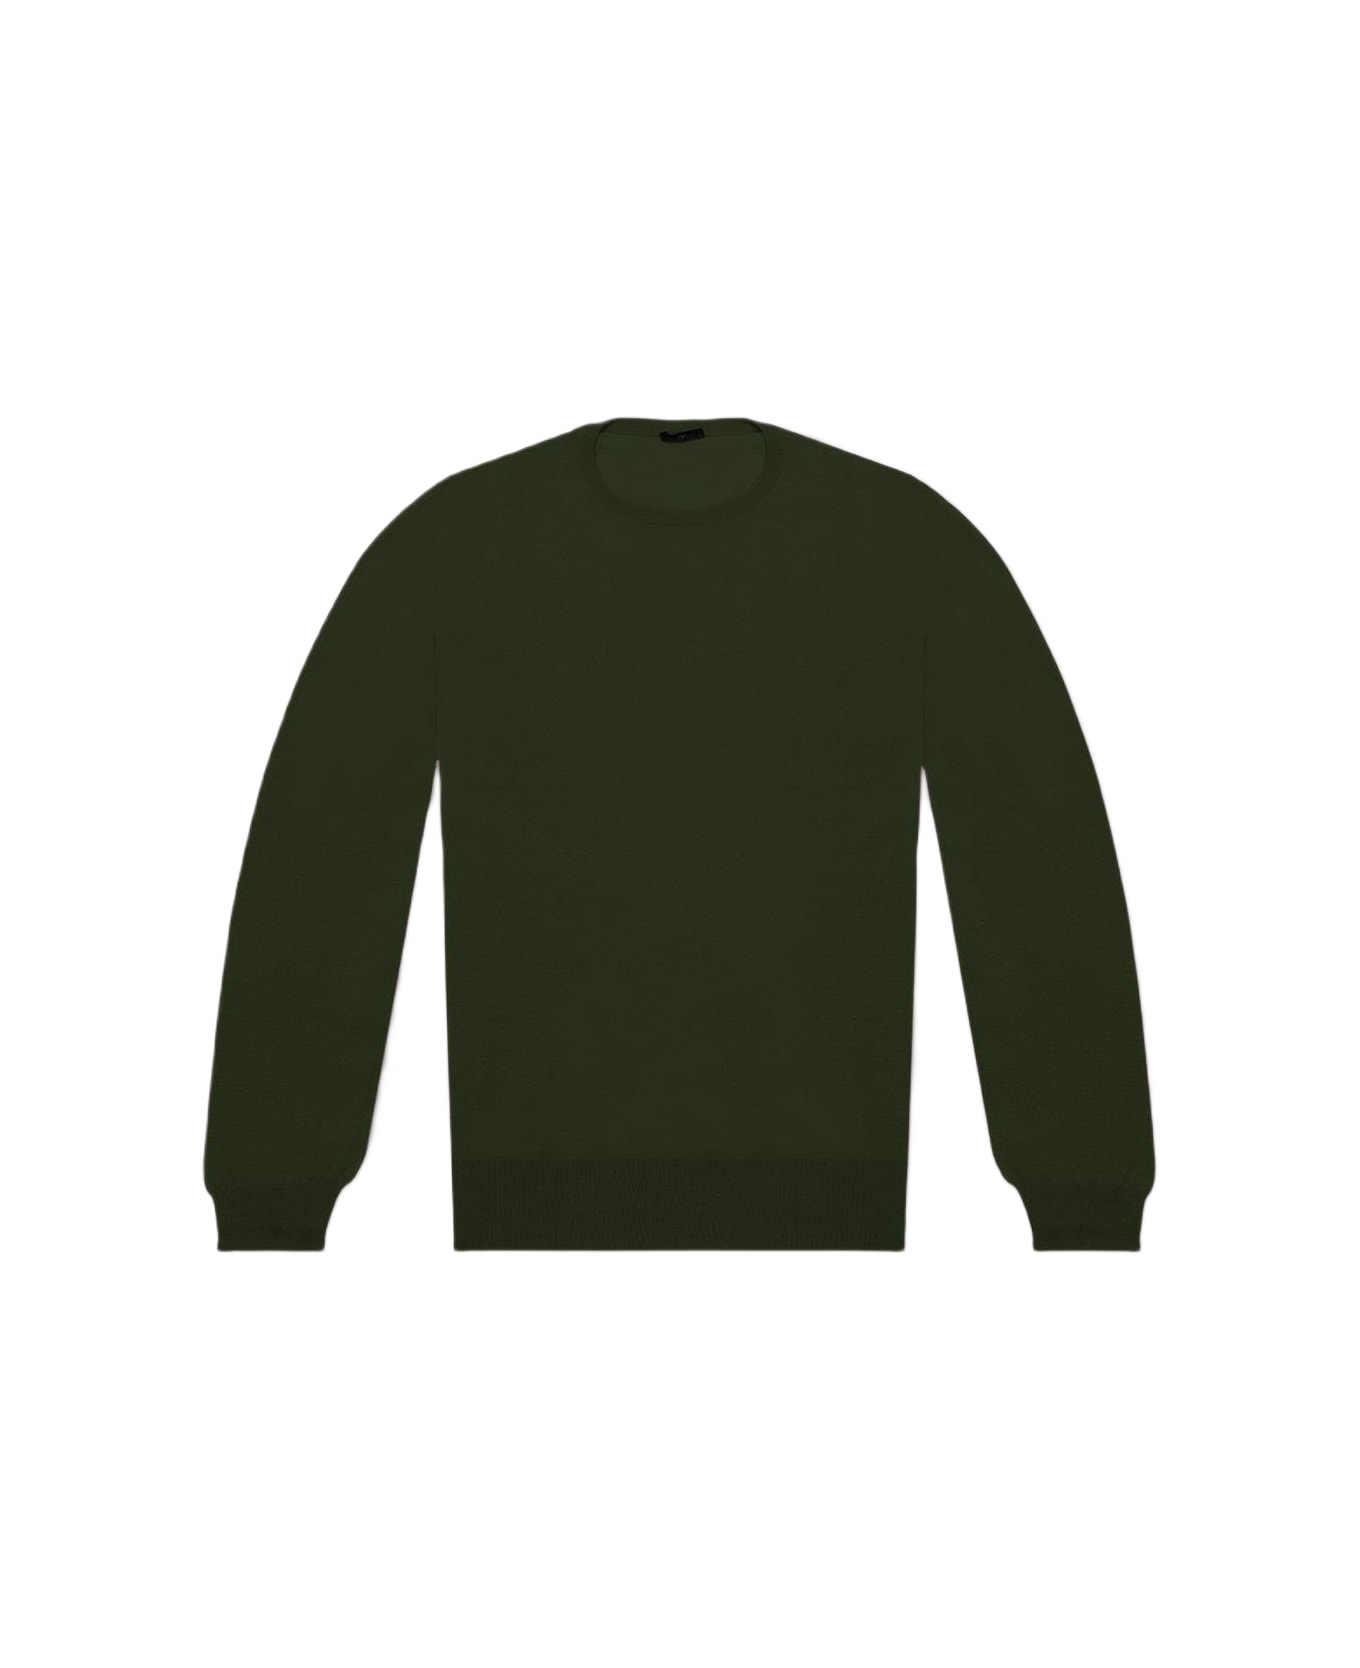 Larusmiani Crew Neck Irish Sweater - Olive